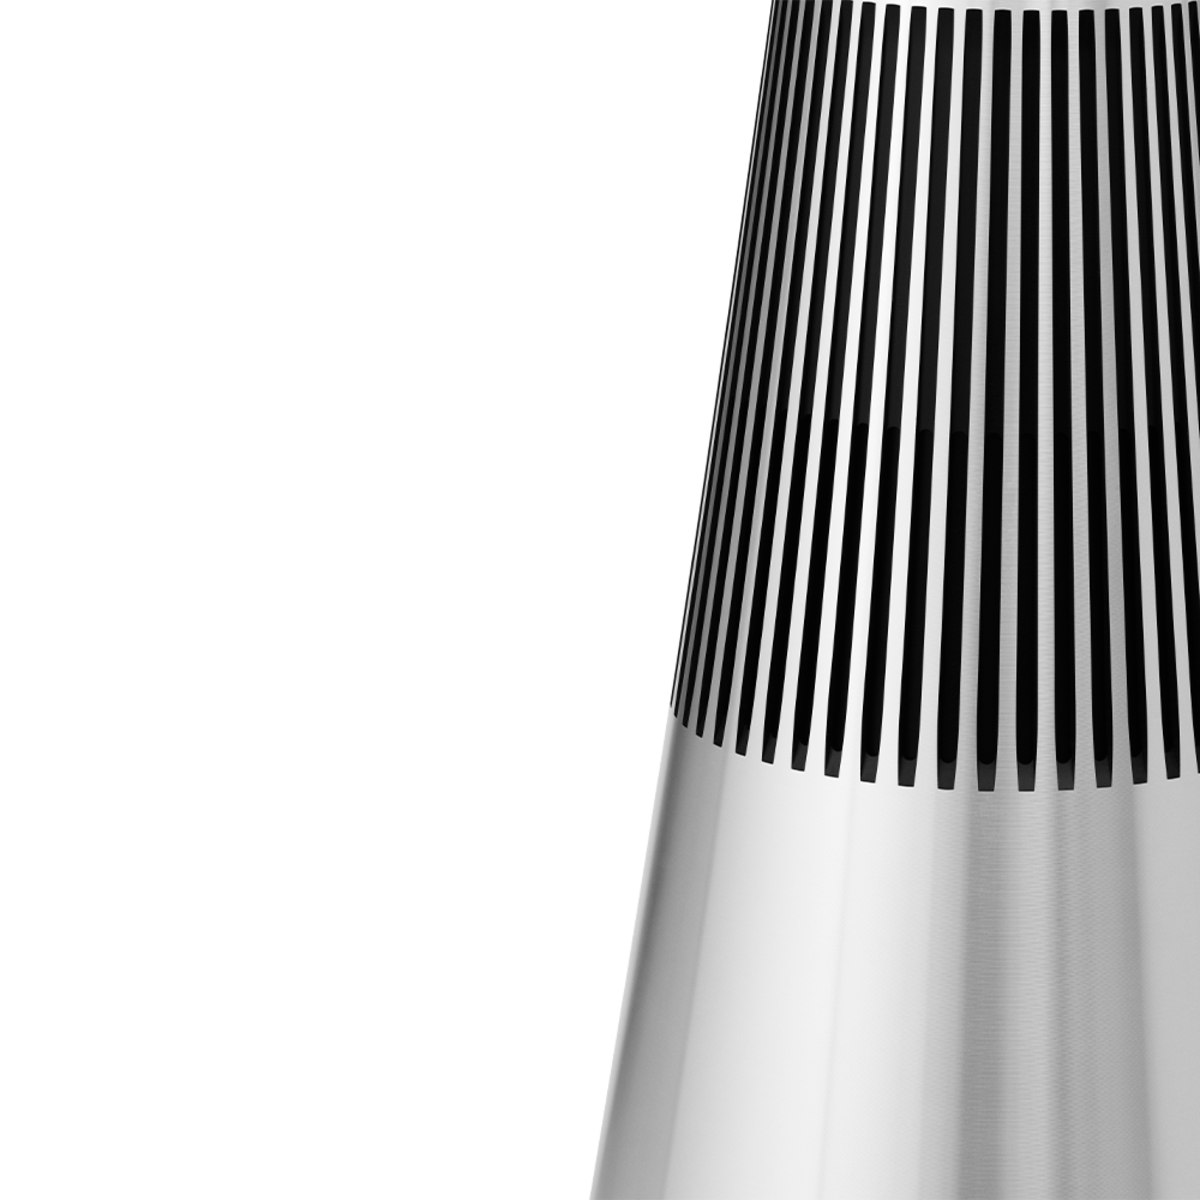 Beosound 2 wireless speaker in silver - Bang Olufsen